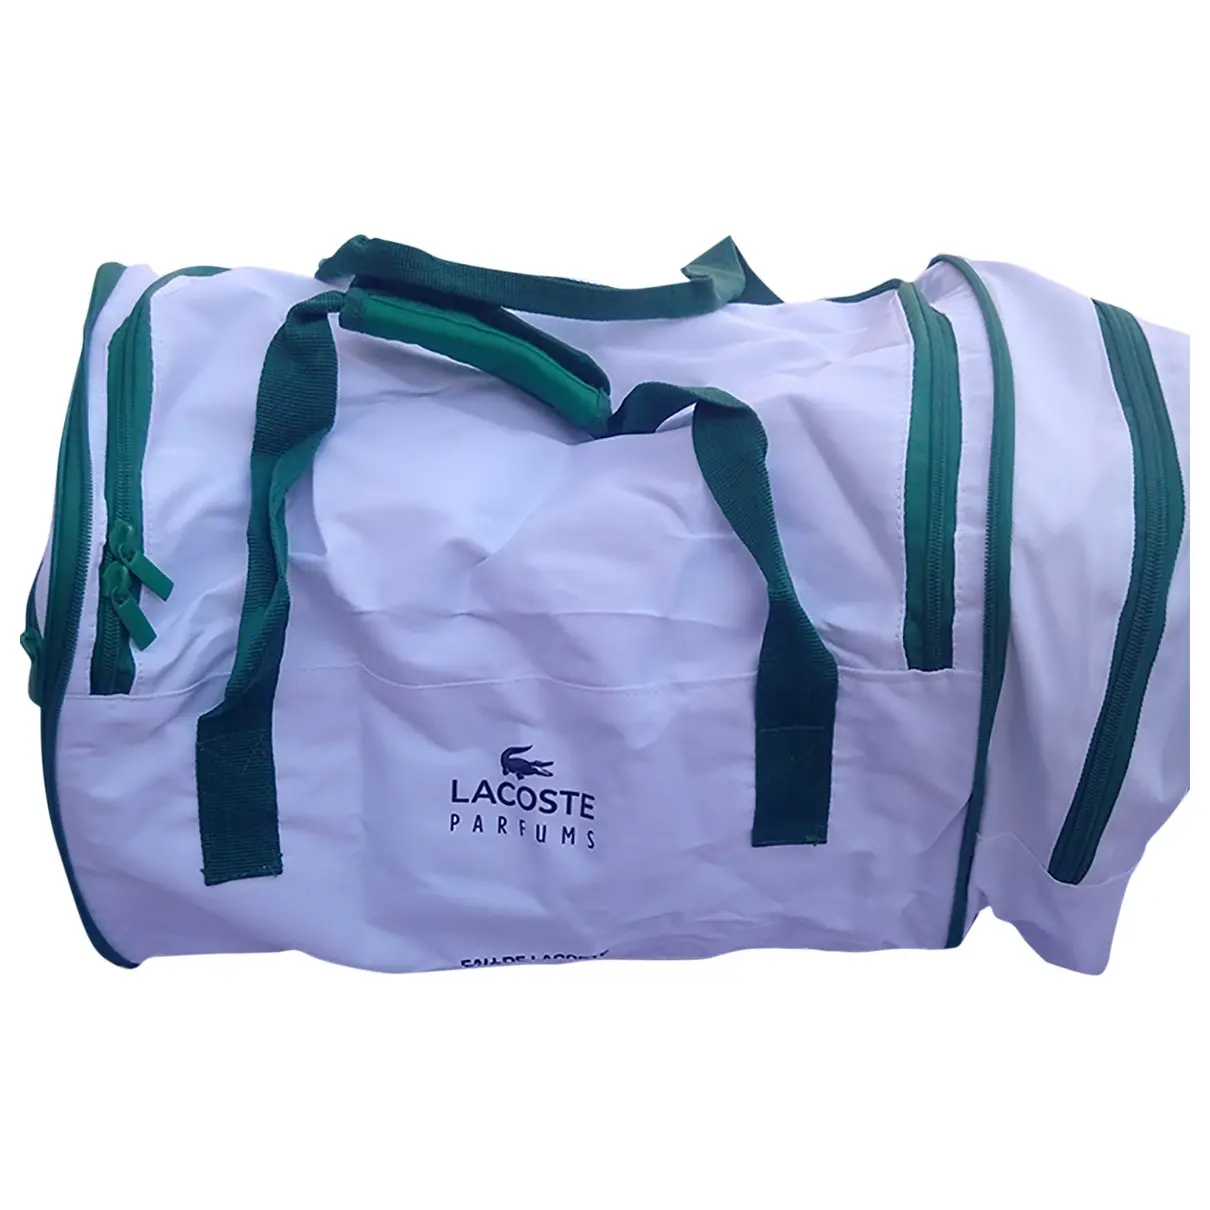 Travel bag Lacoste